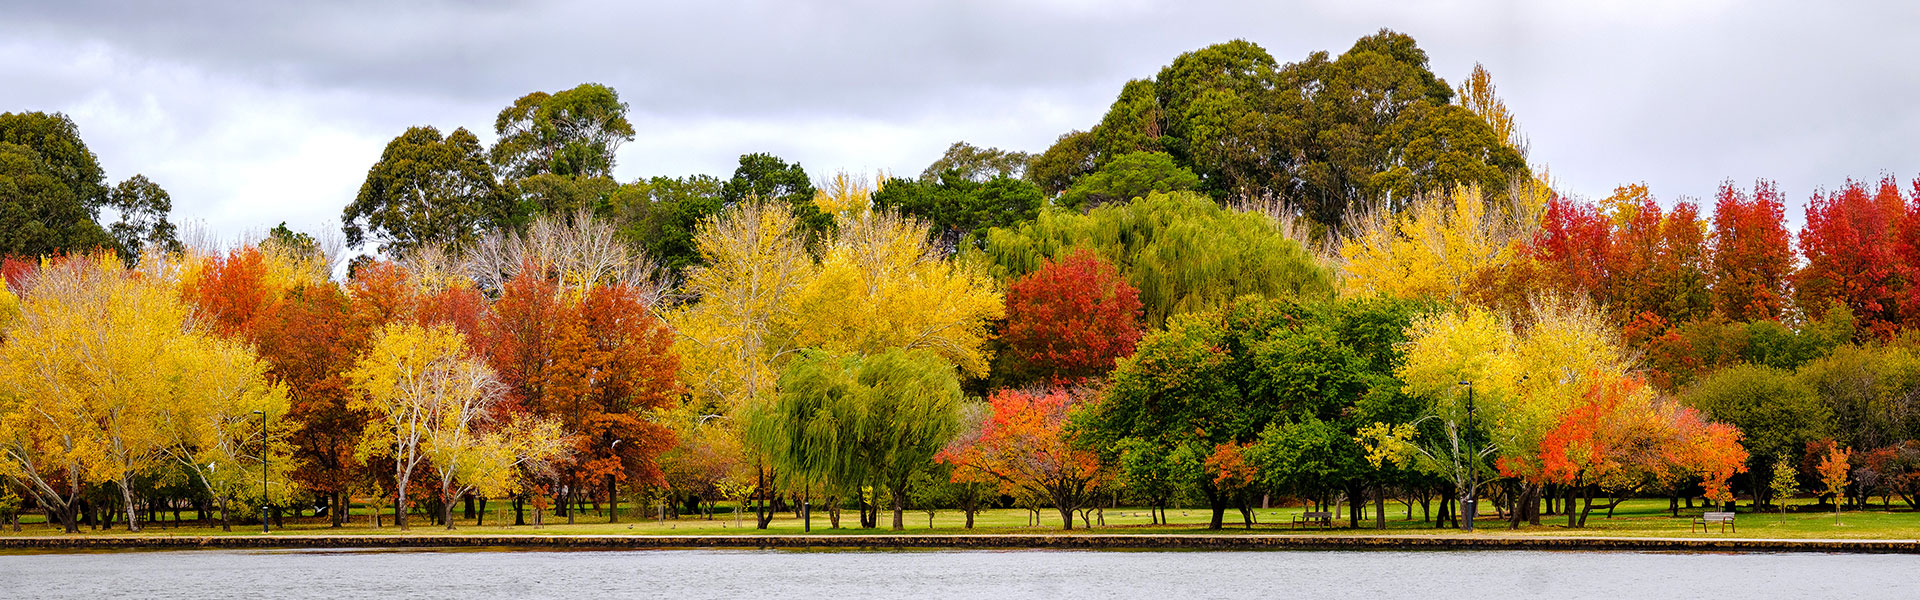 Autumn trees near a lake